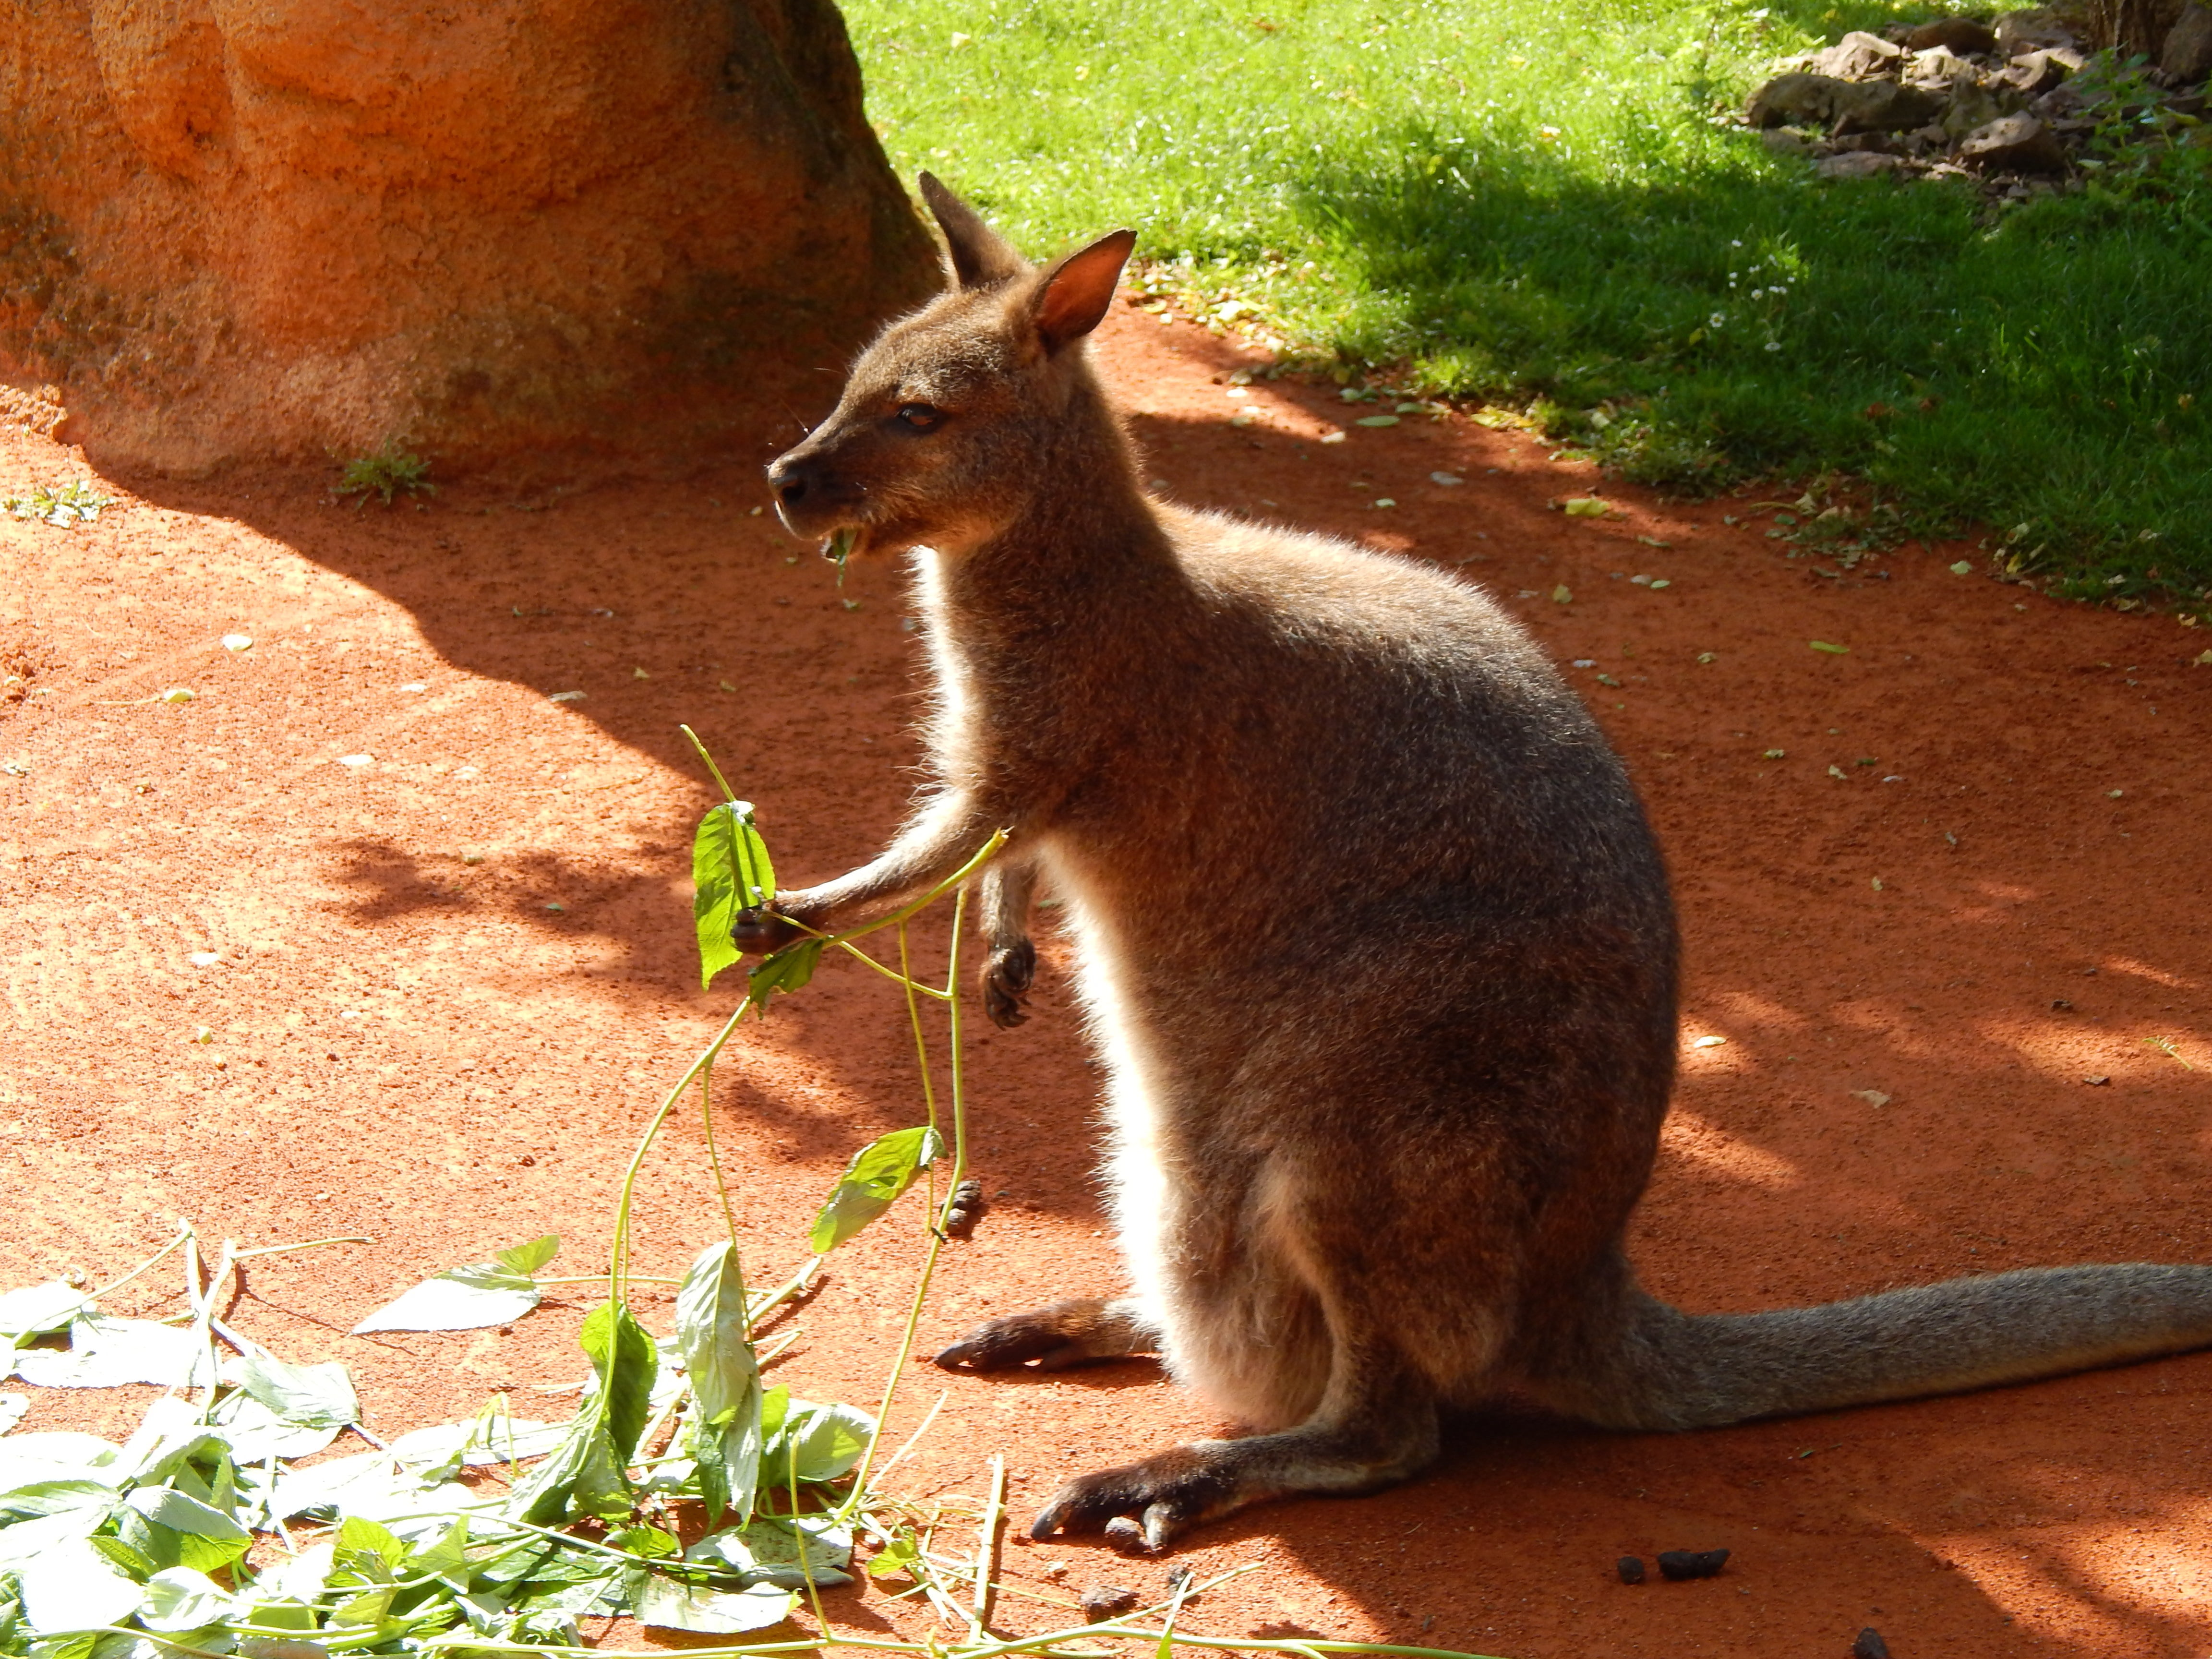 brown kangaroo, grass, food, shade, marsupial, animal, nature